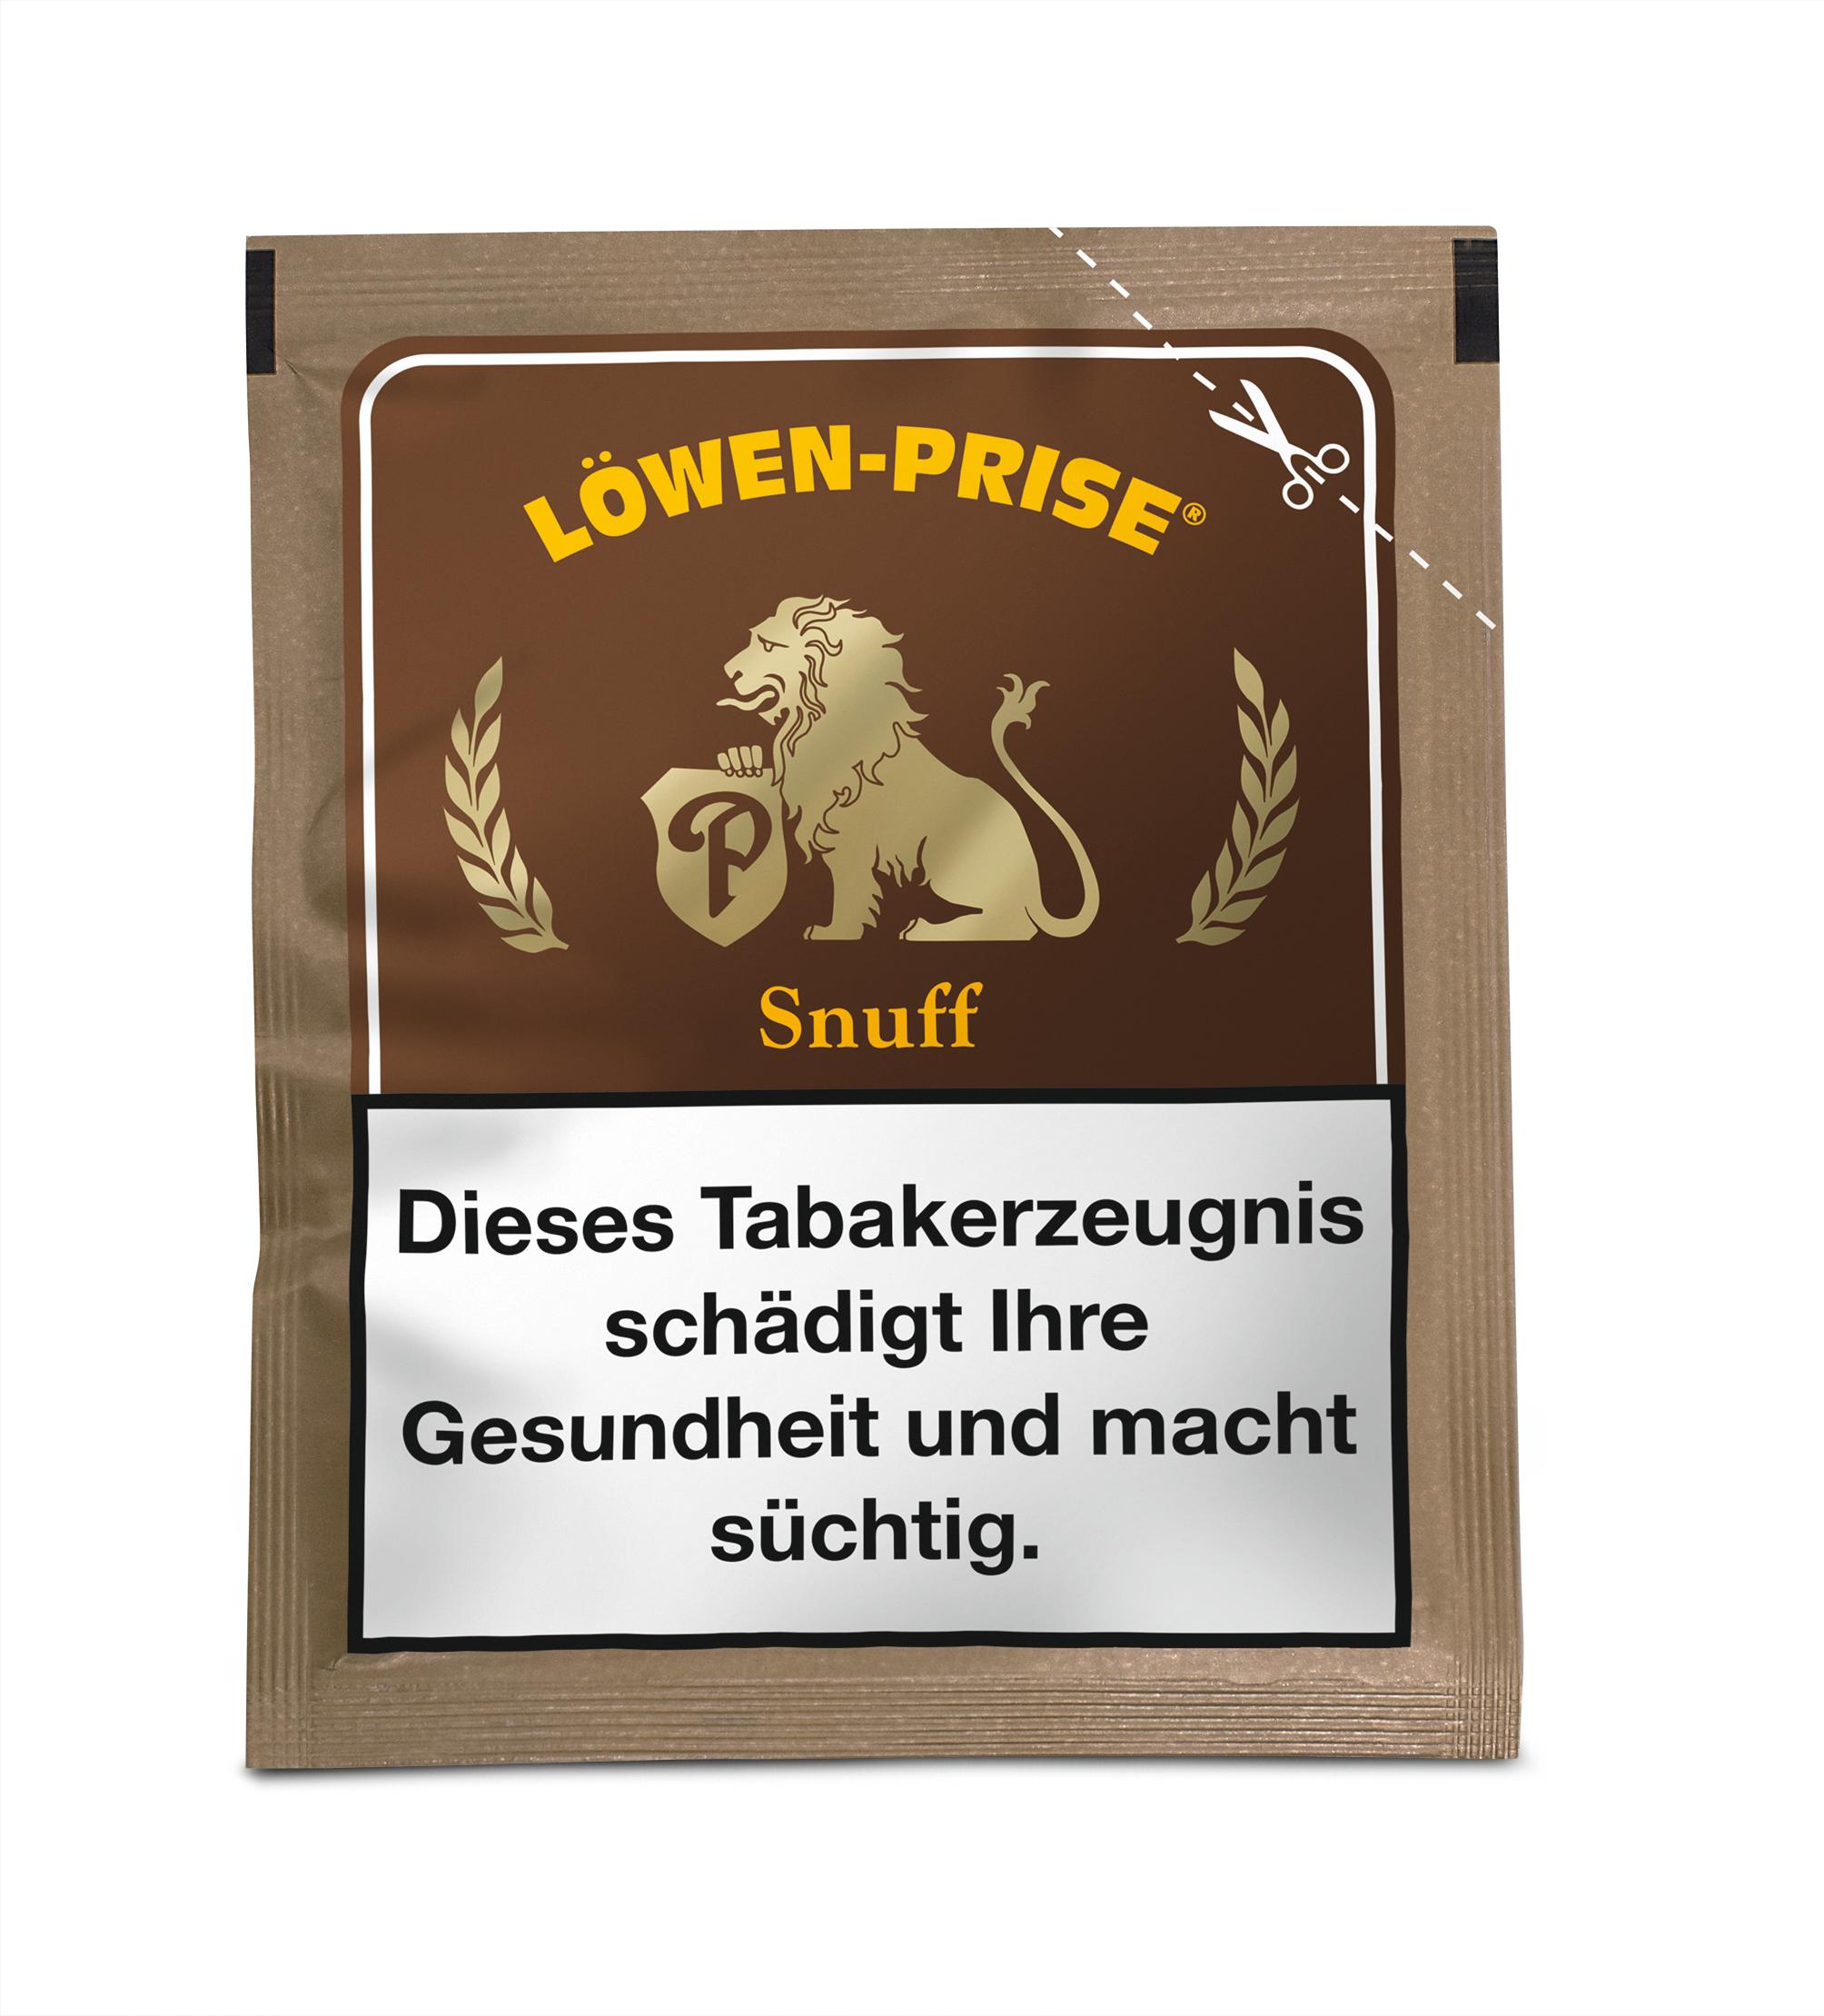 Löwenprise Snuff 10 x 10g Beutel